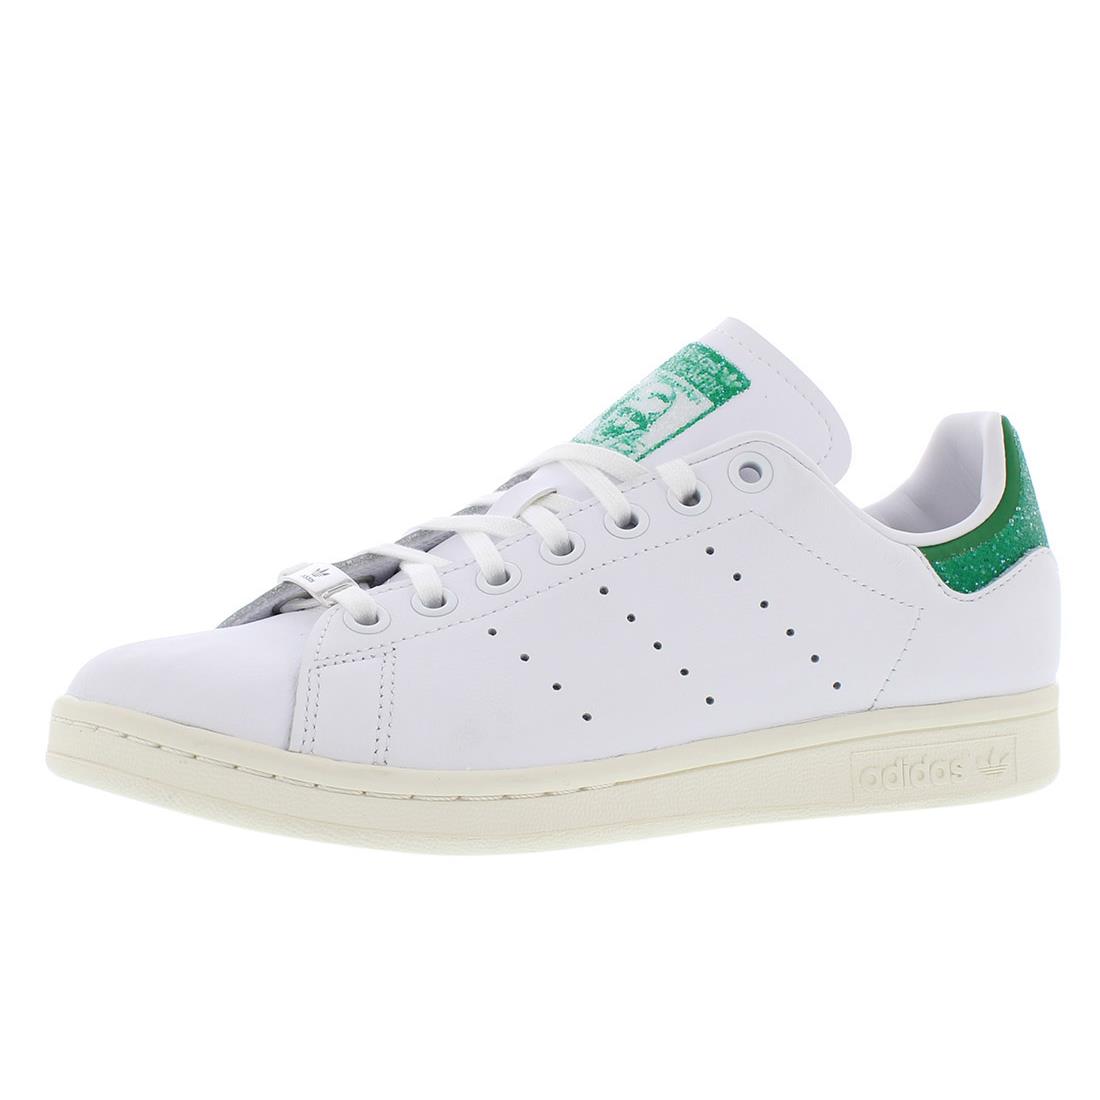 Adidas Originals Stan Smith Mens Shoes - White/Green, Main: White